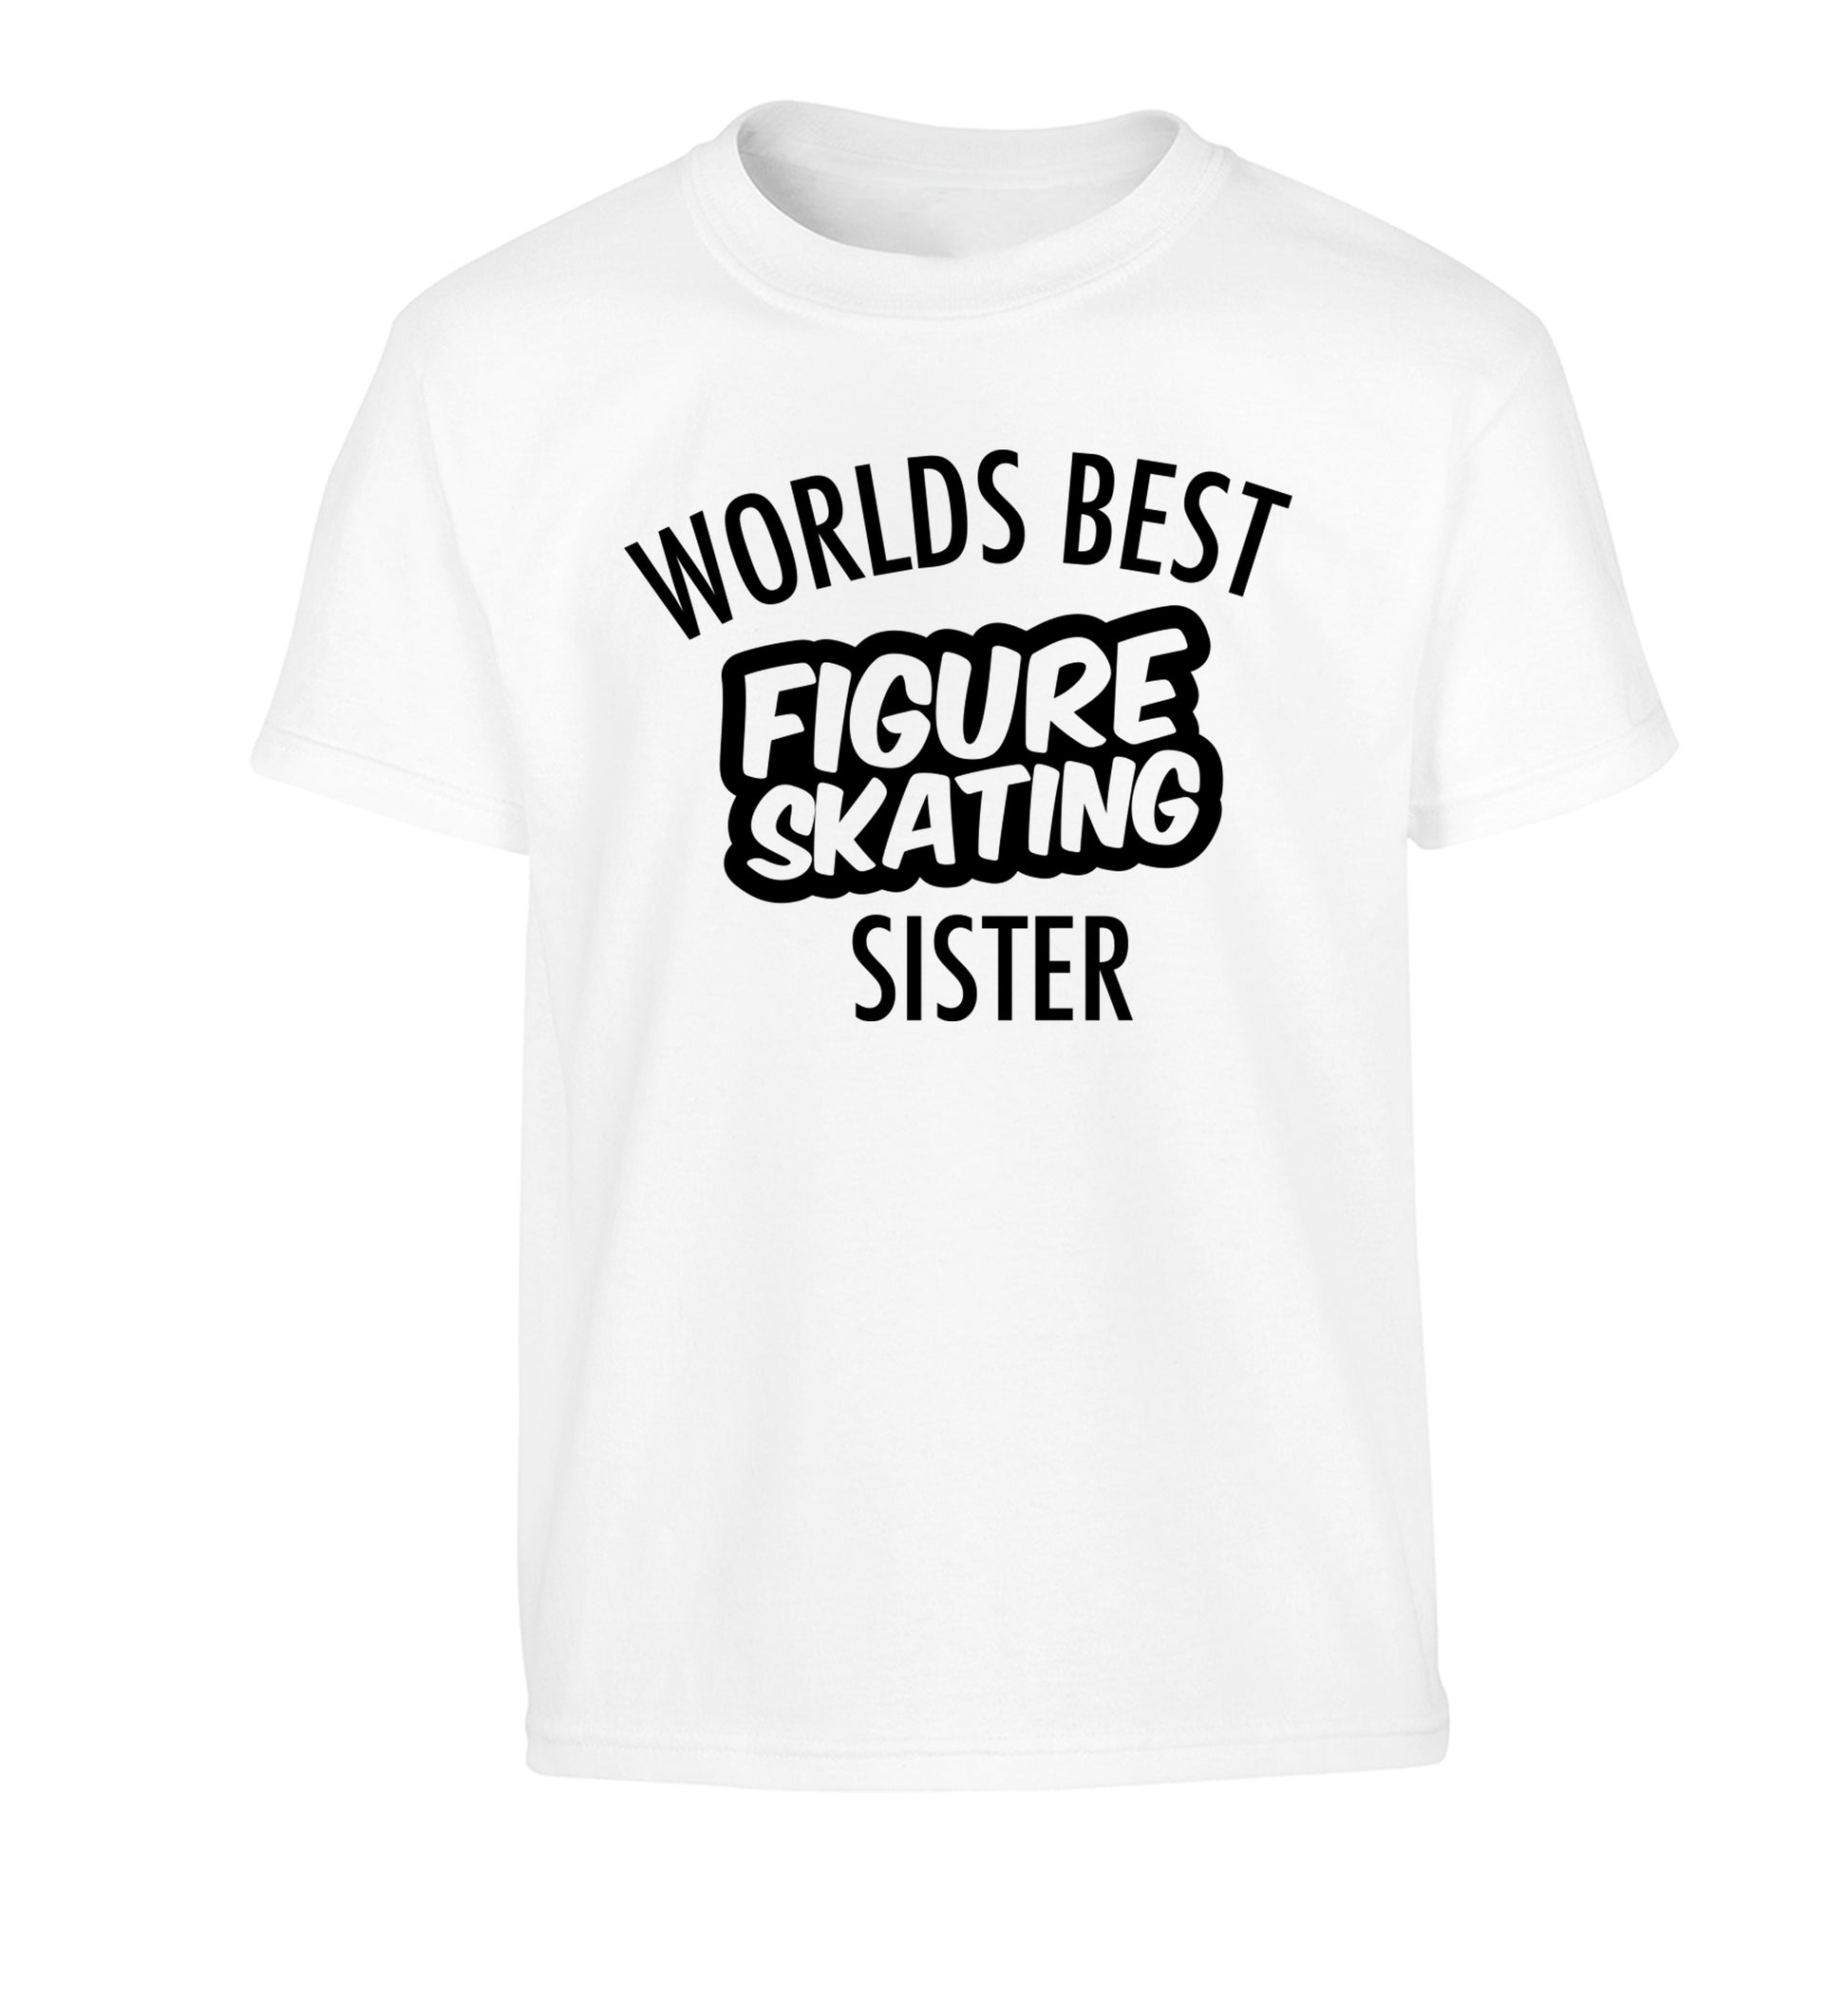 Worlds best figure skating sisterChildren's white Tshirt 12-14 Years